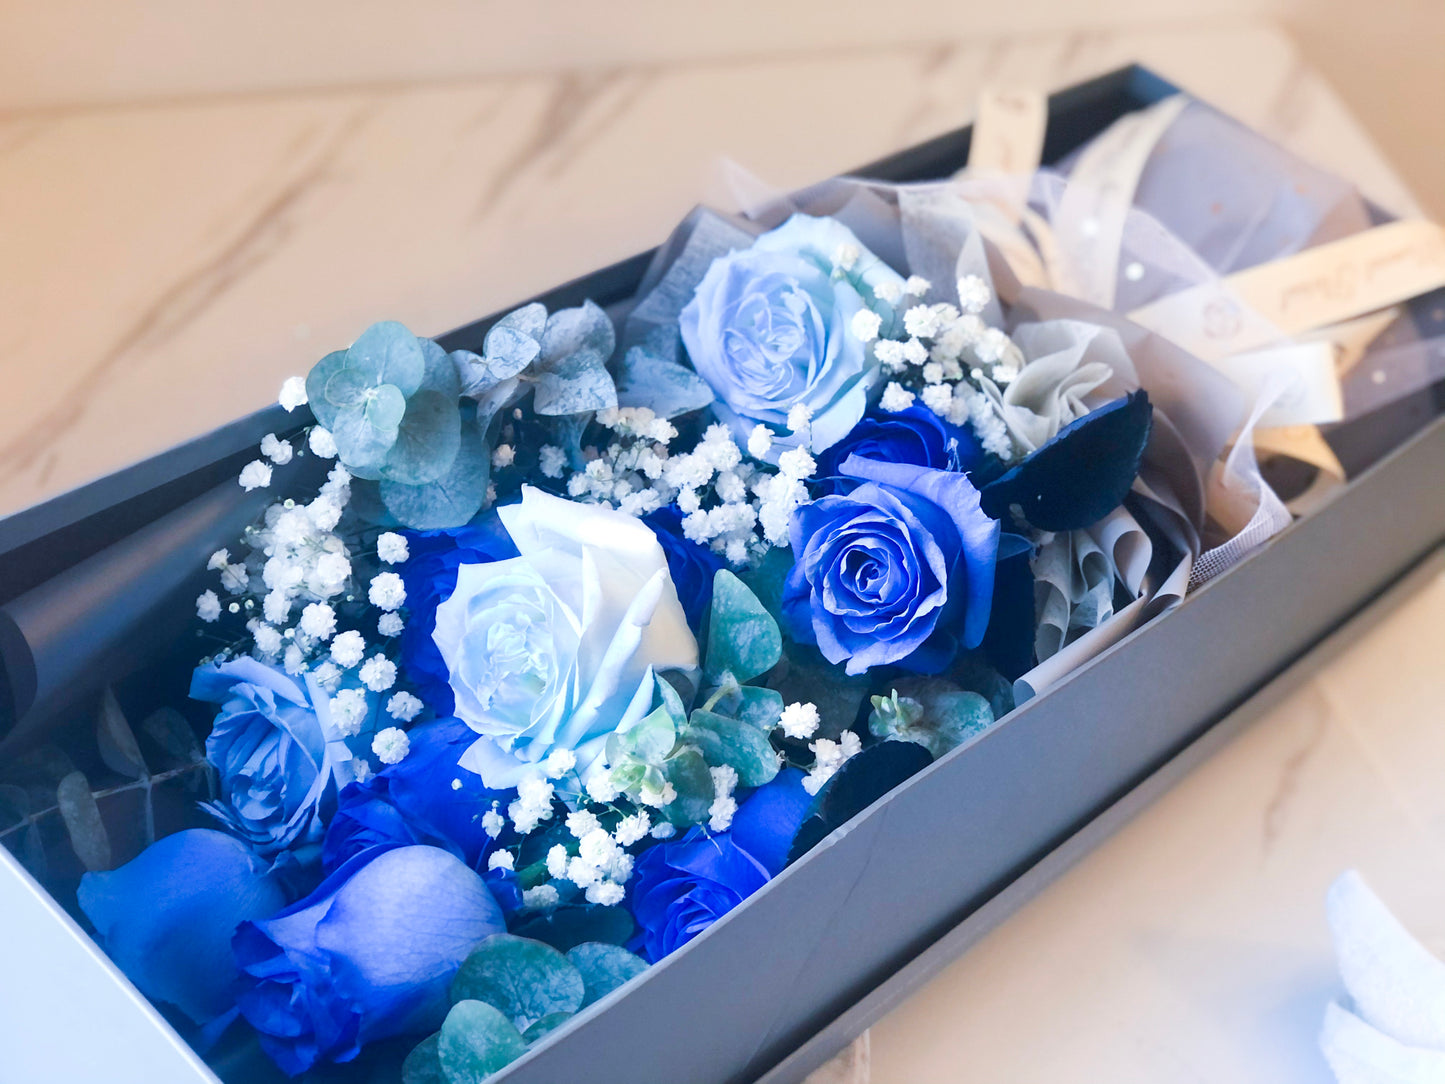 [FRESH FLOWER] Fantasy blue rose bouquet in long gift box